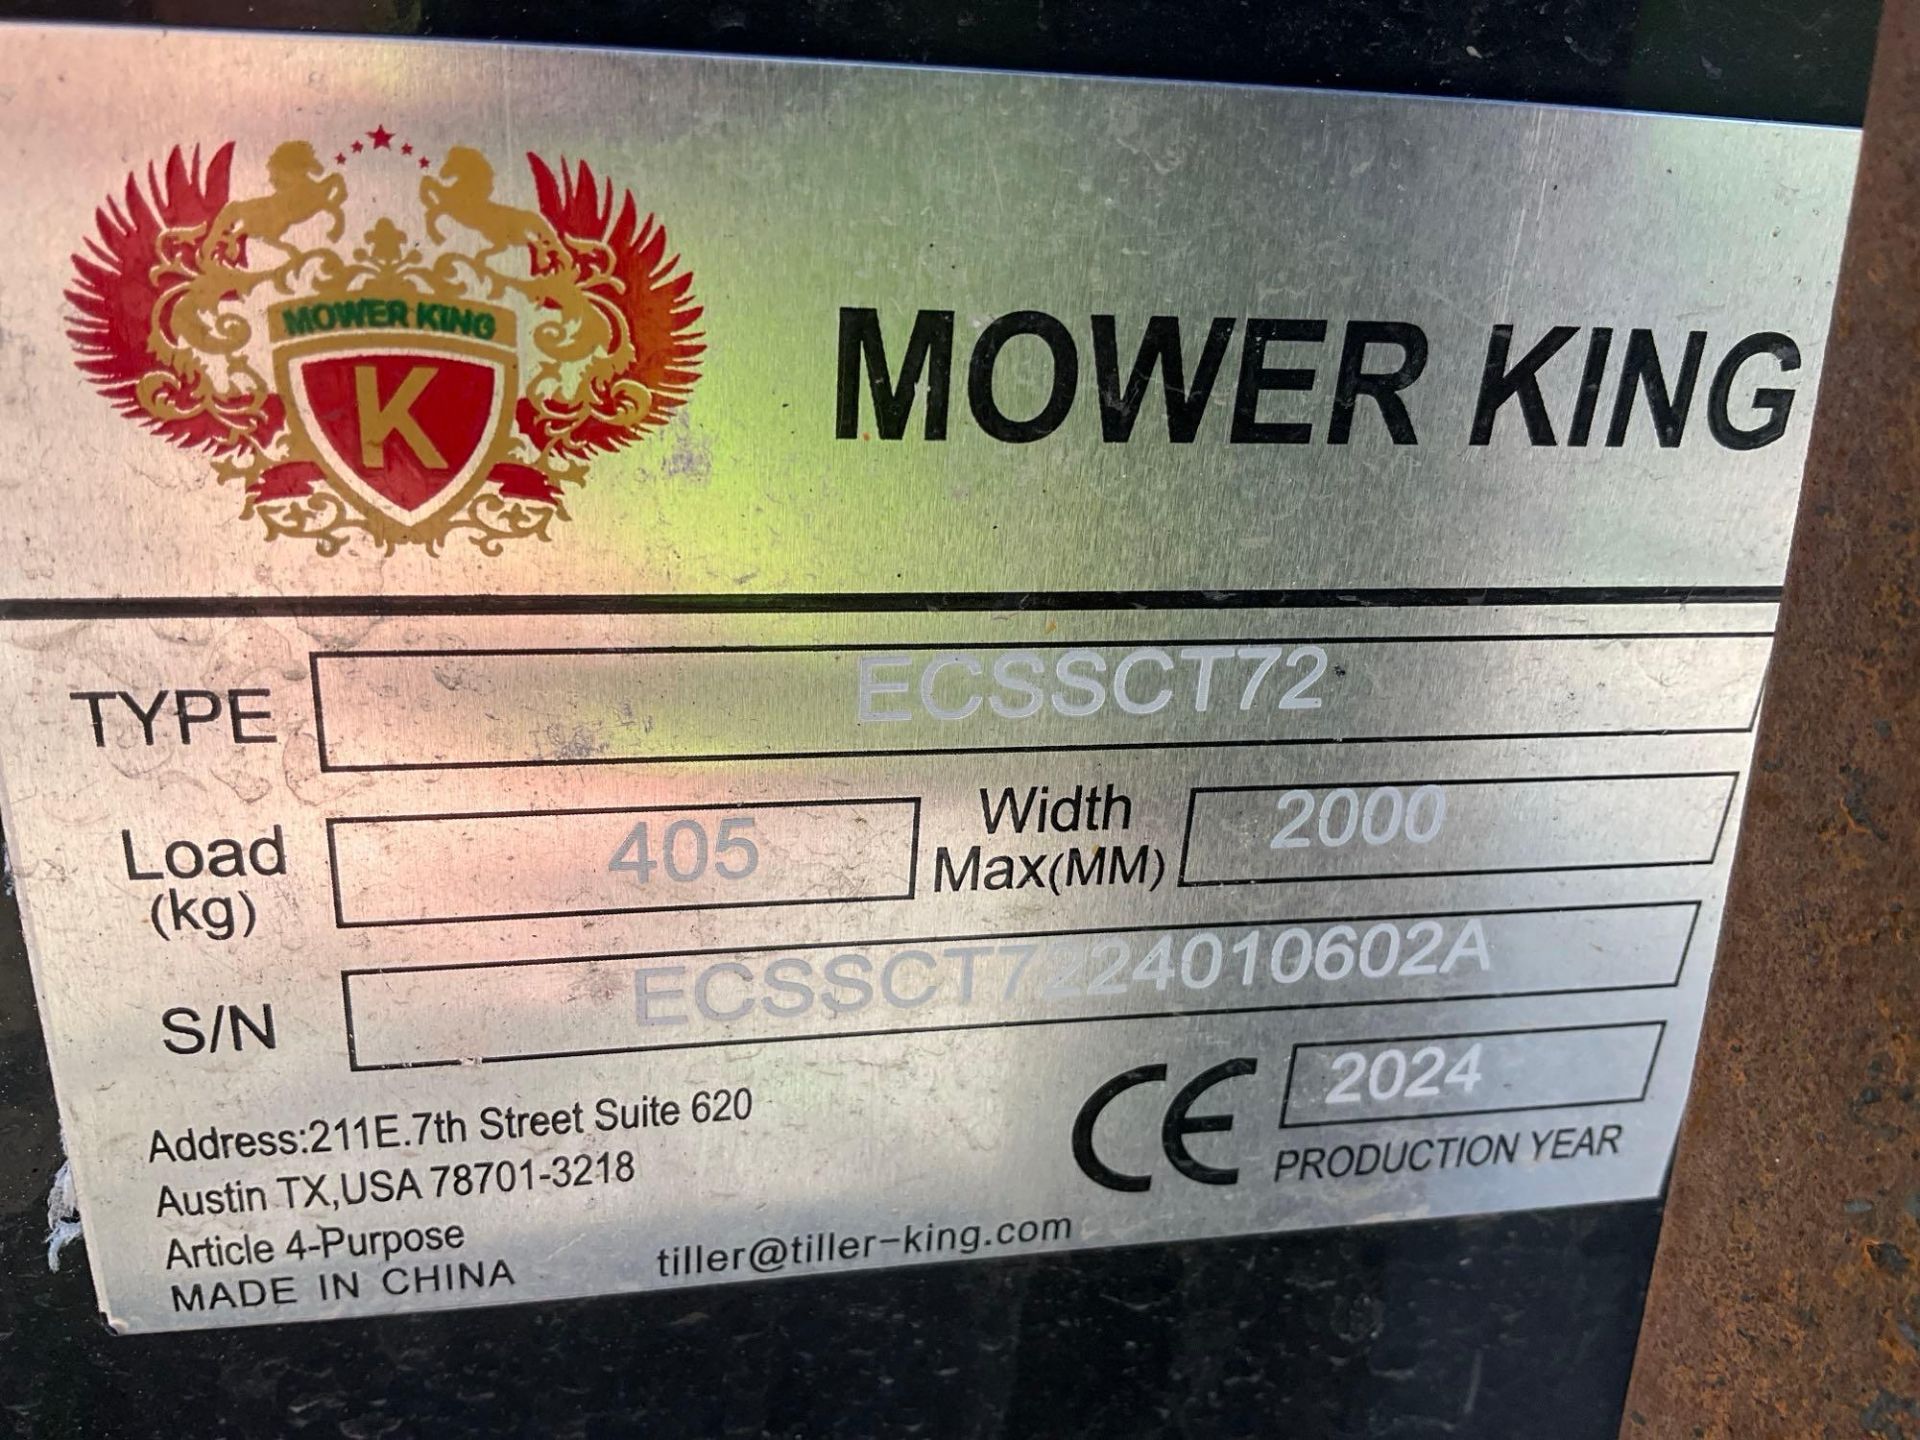 UNUSED 2024 MOWER KING TRENCHER ATTACHMENT MODEL ECSSCT72 FOR UNIVERSAL SKID STEER - Image 7 of 7